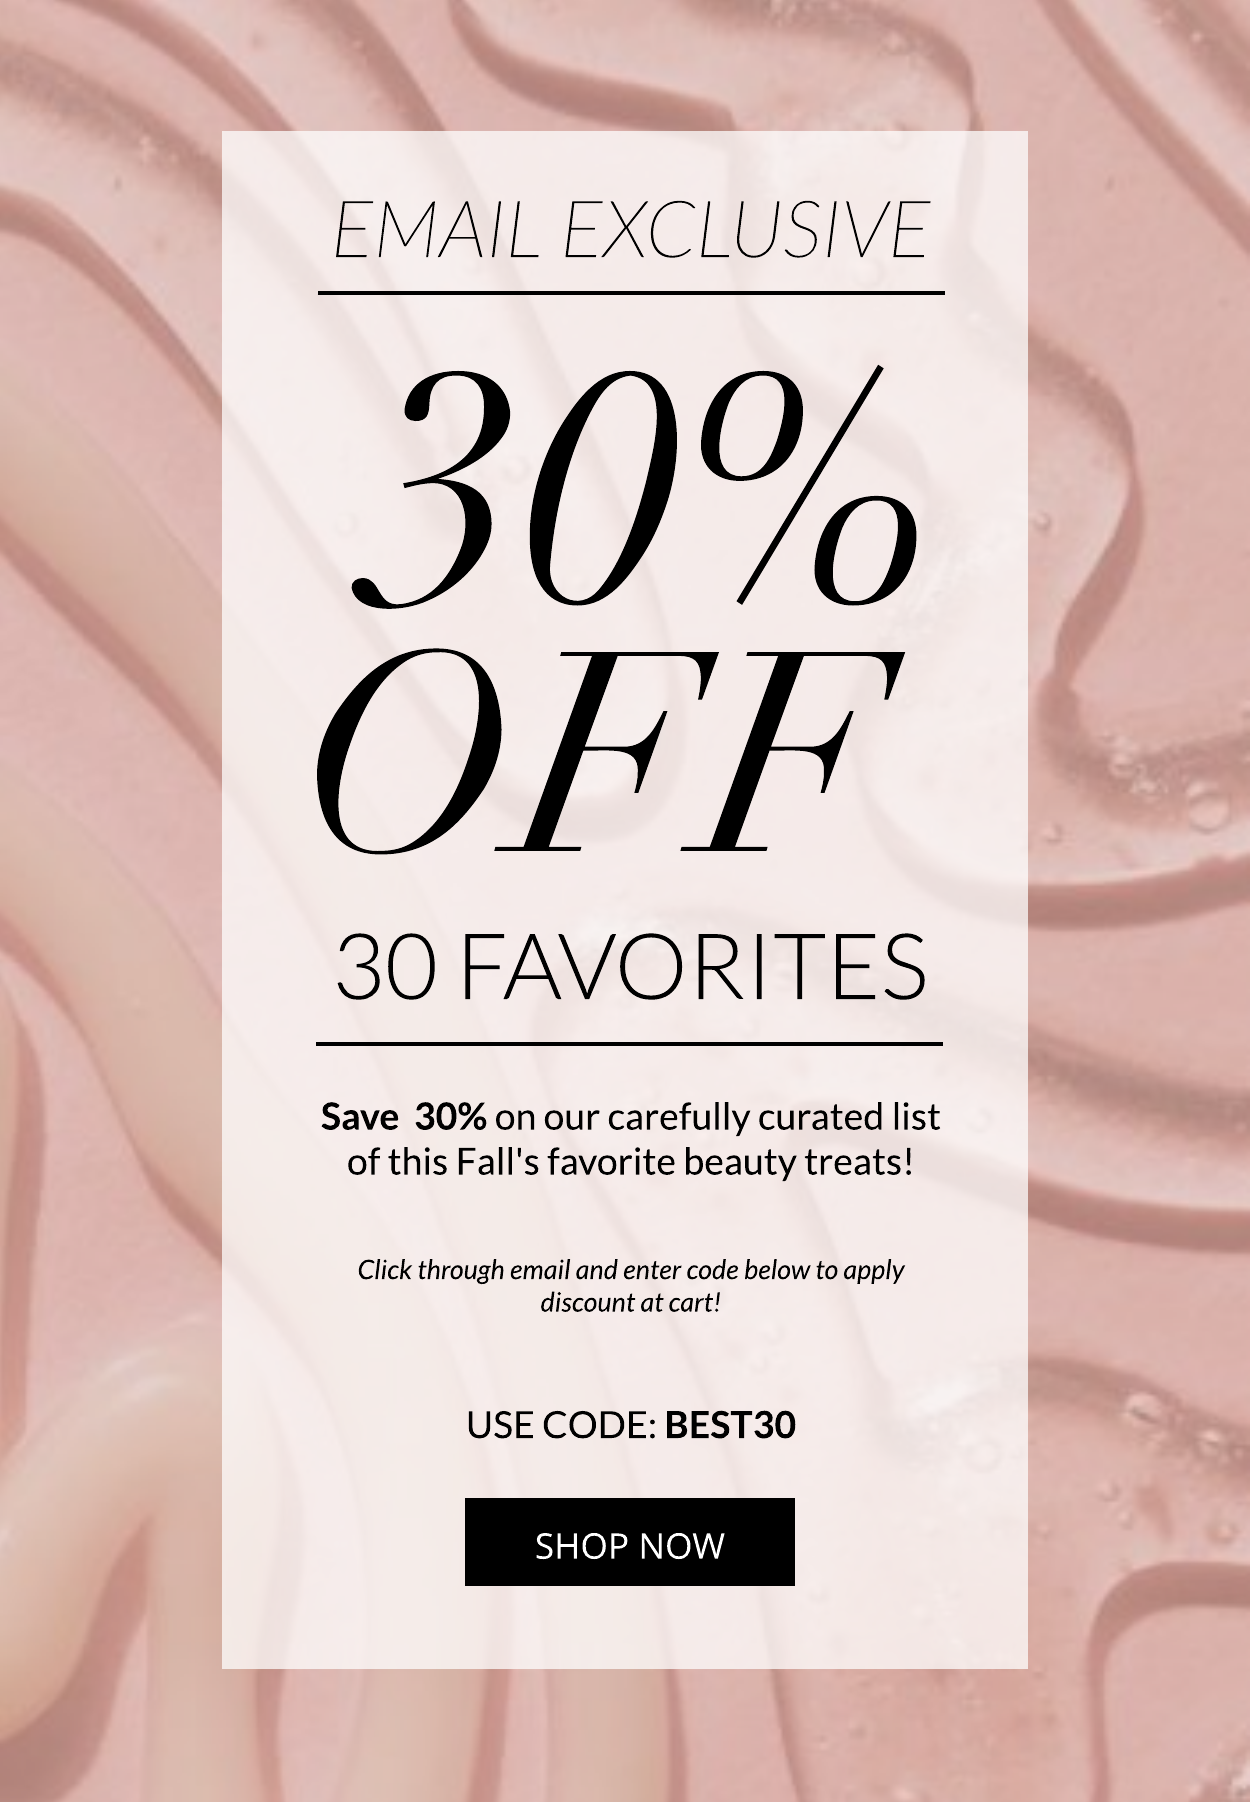 Save 30% on 30 Favorite Brands!